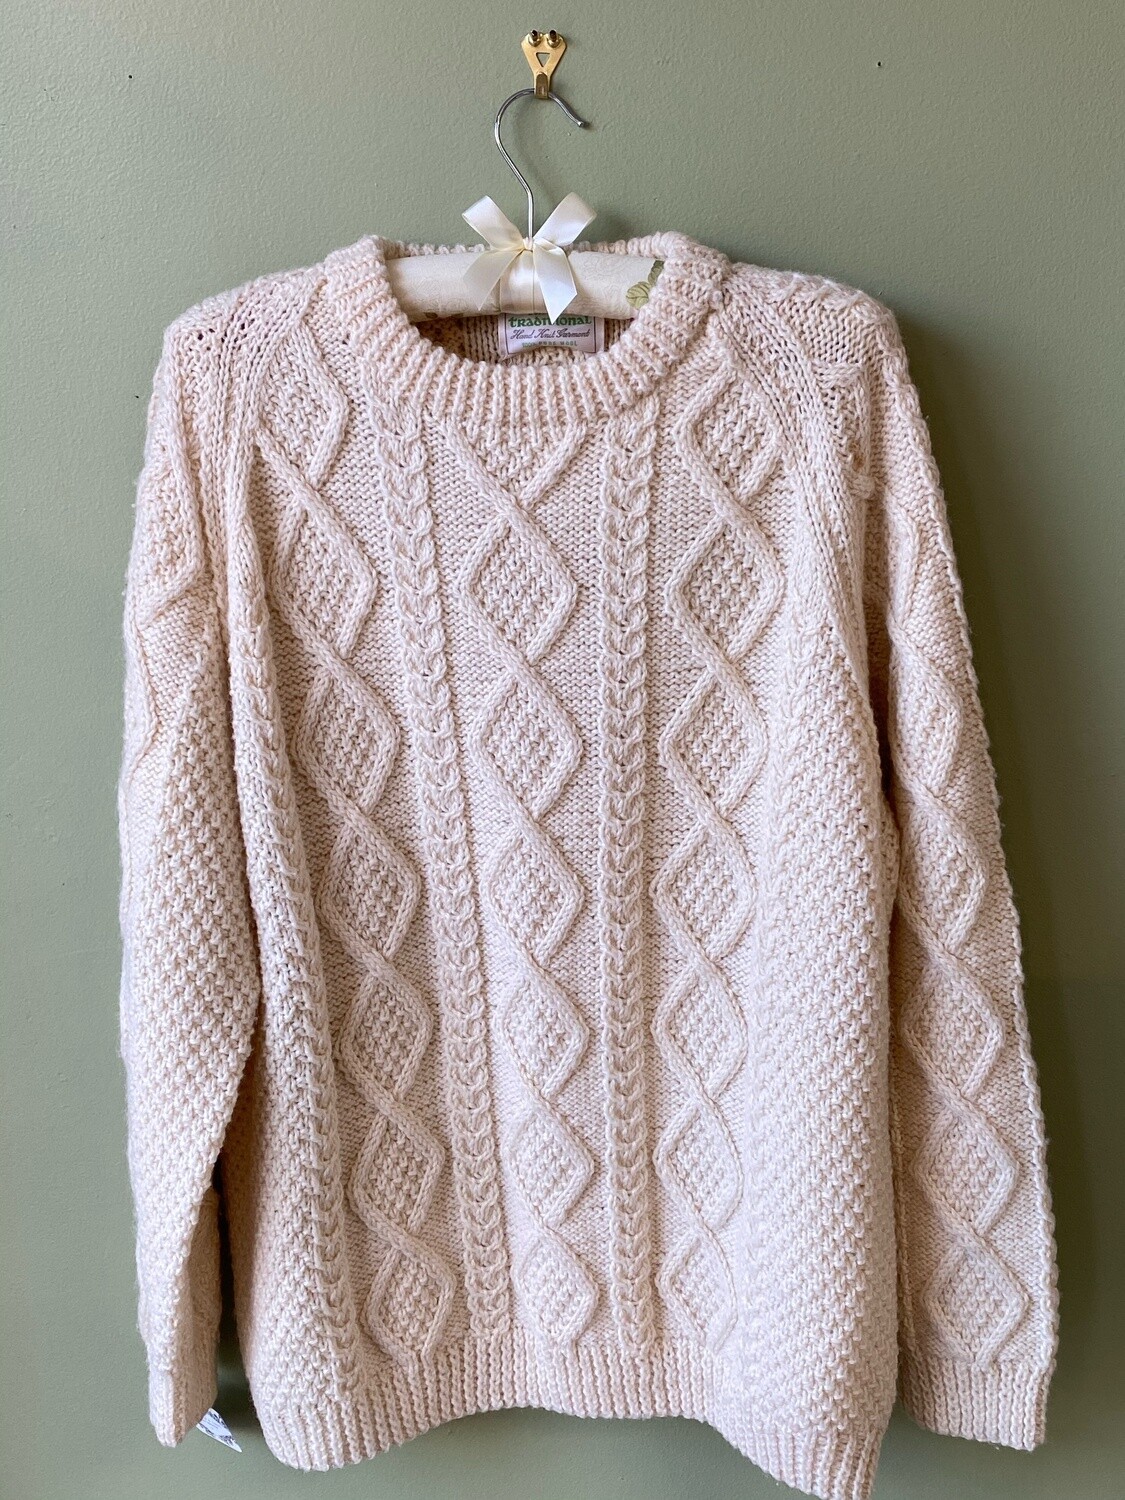 An Irish Traditional Brand Herringbone 100% Wool Sweater, Estimated Size M/L 